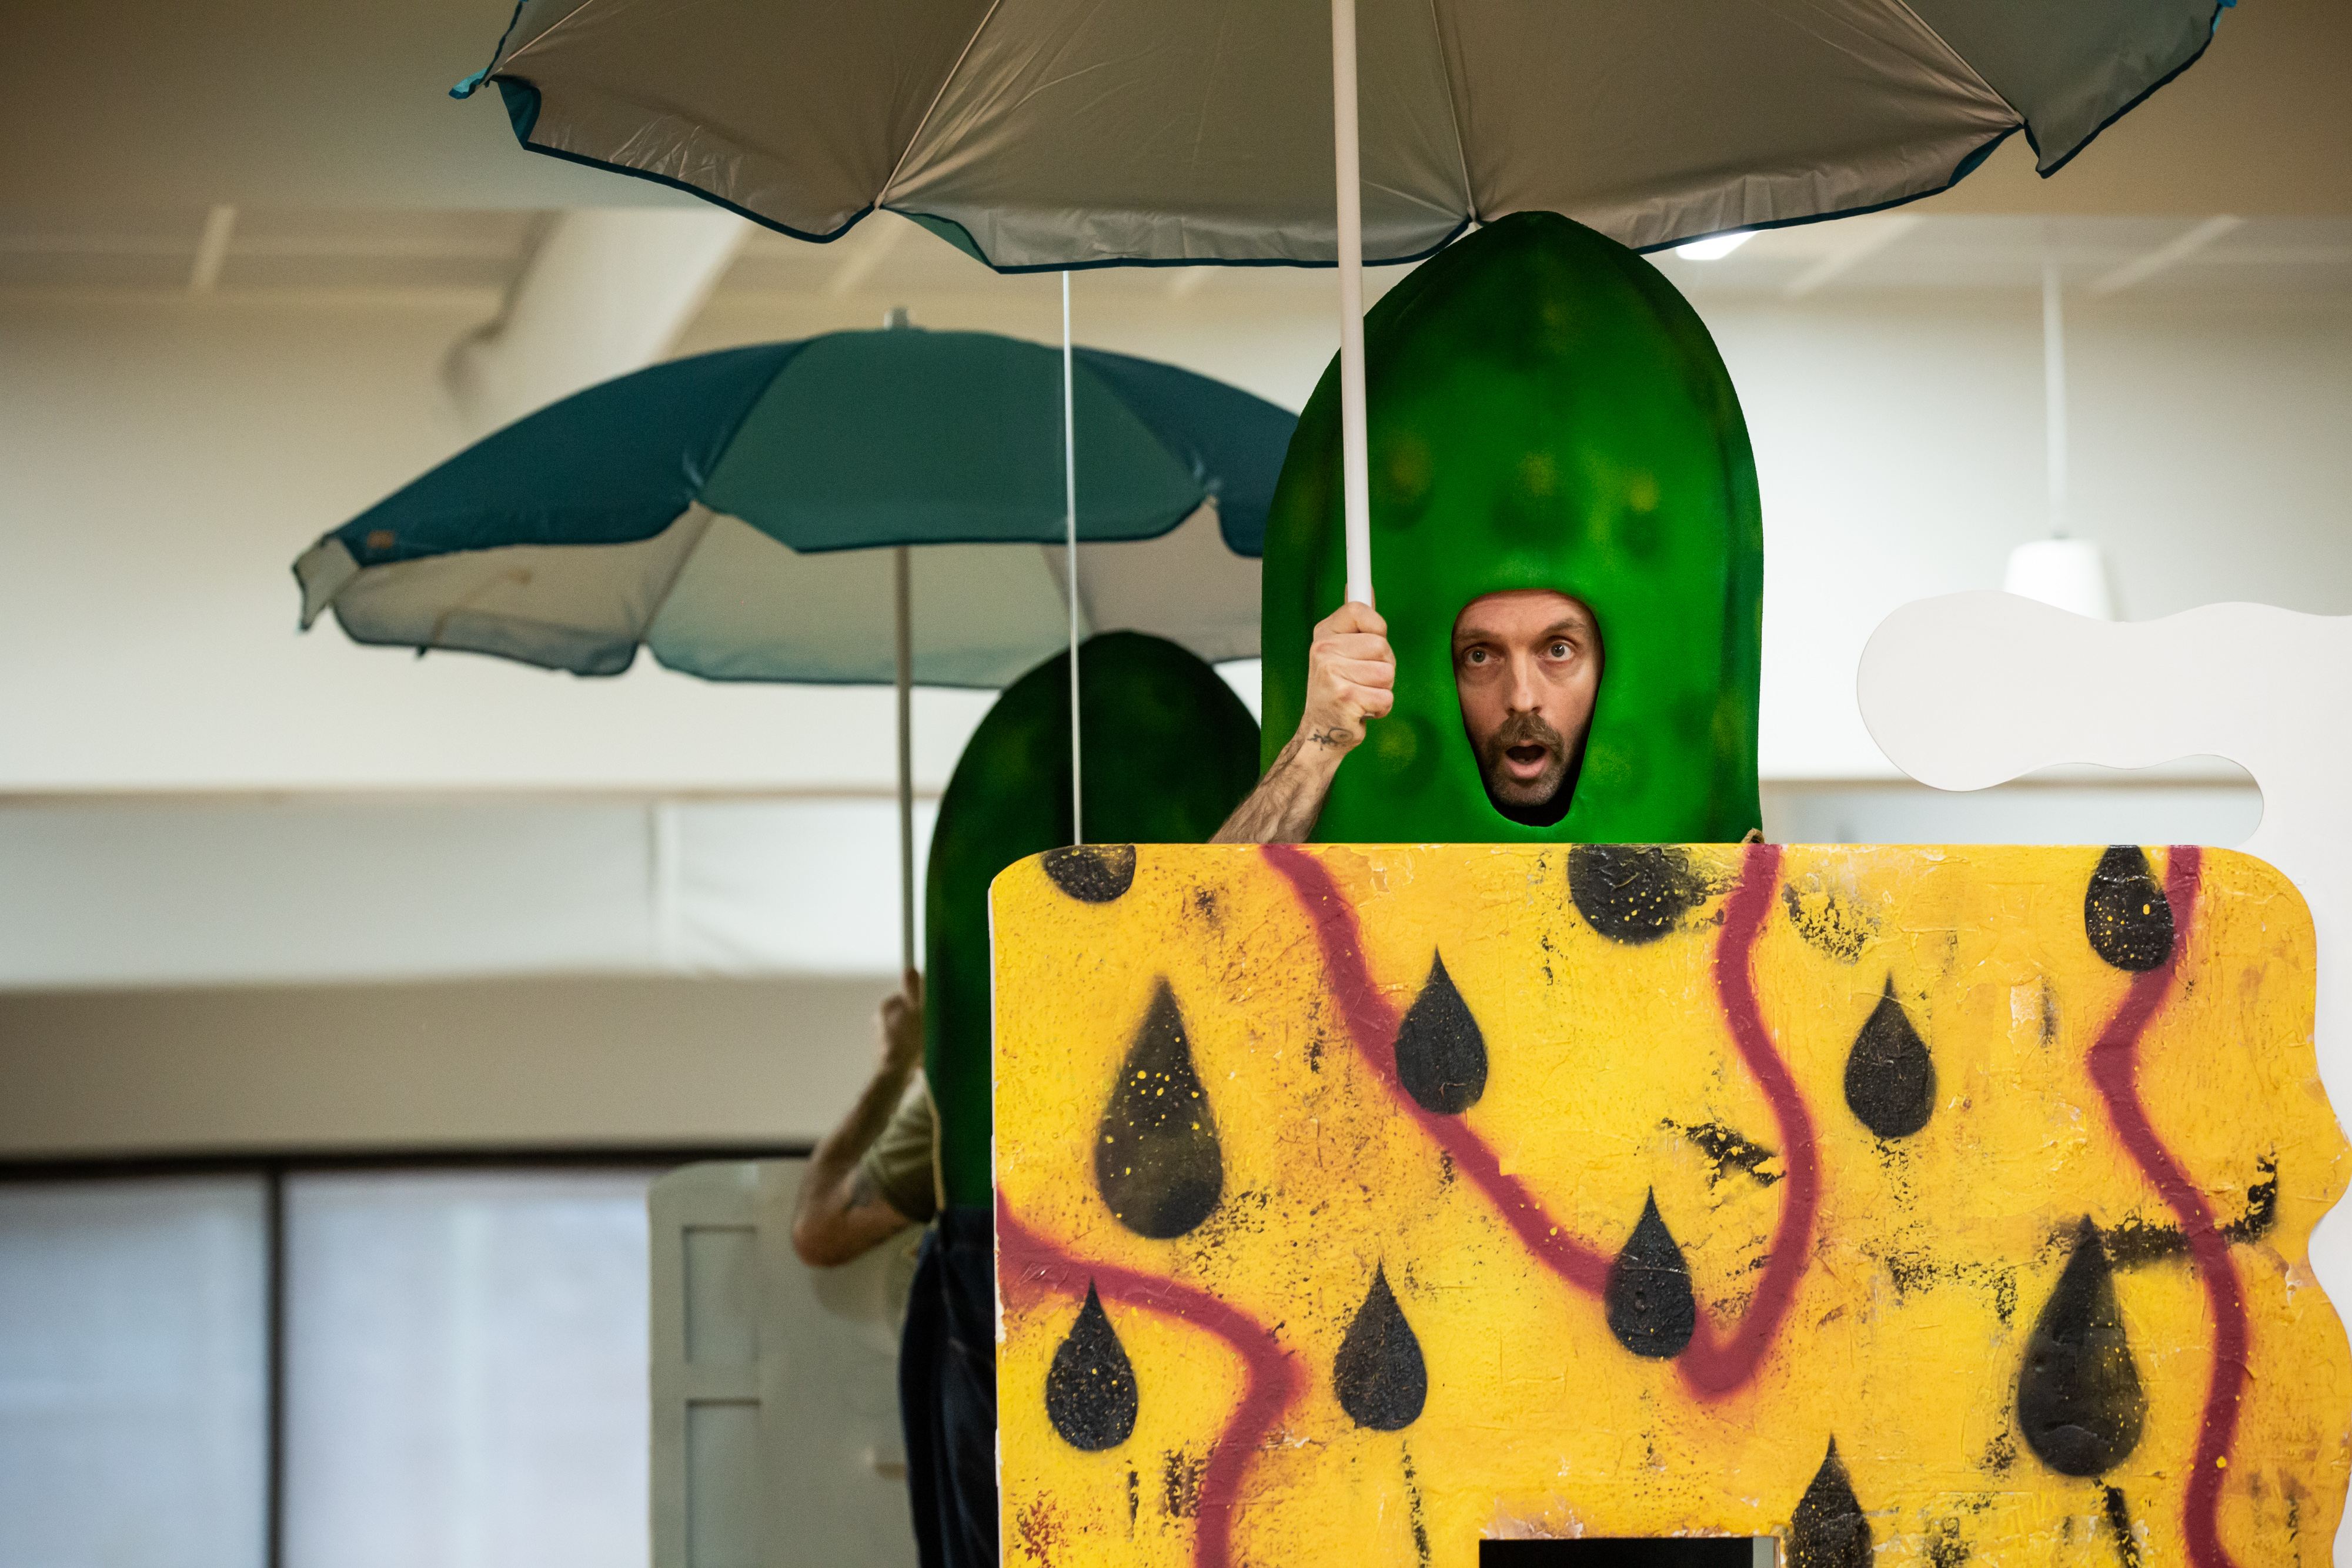 A man in a colourful costume under an umbrella